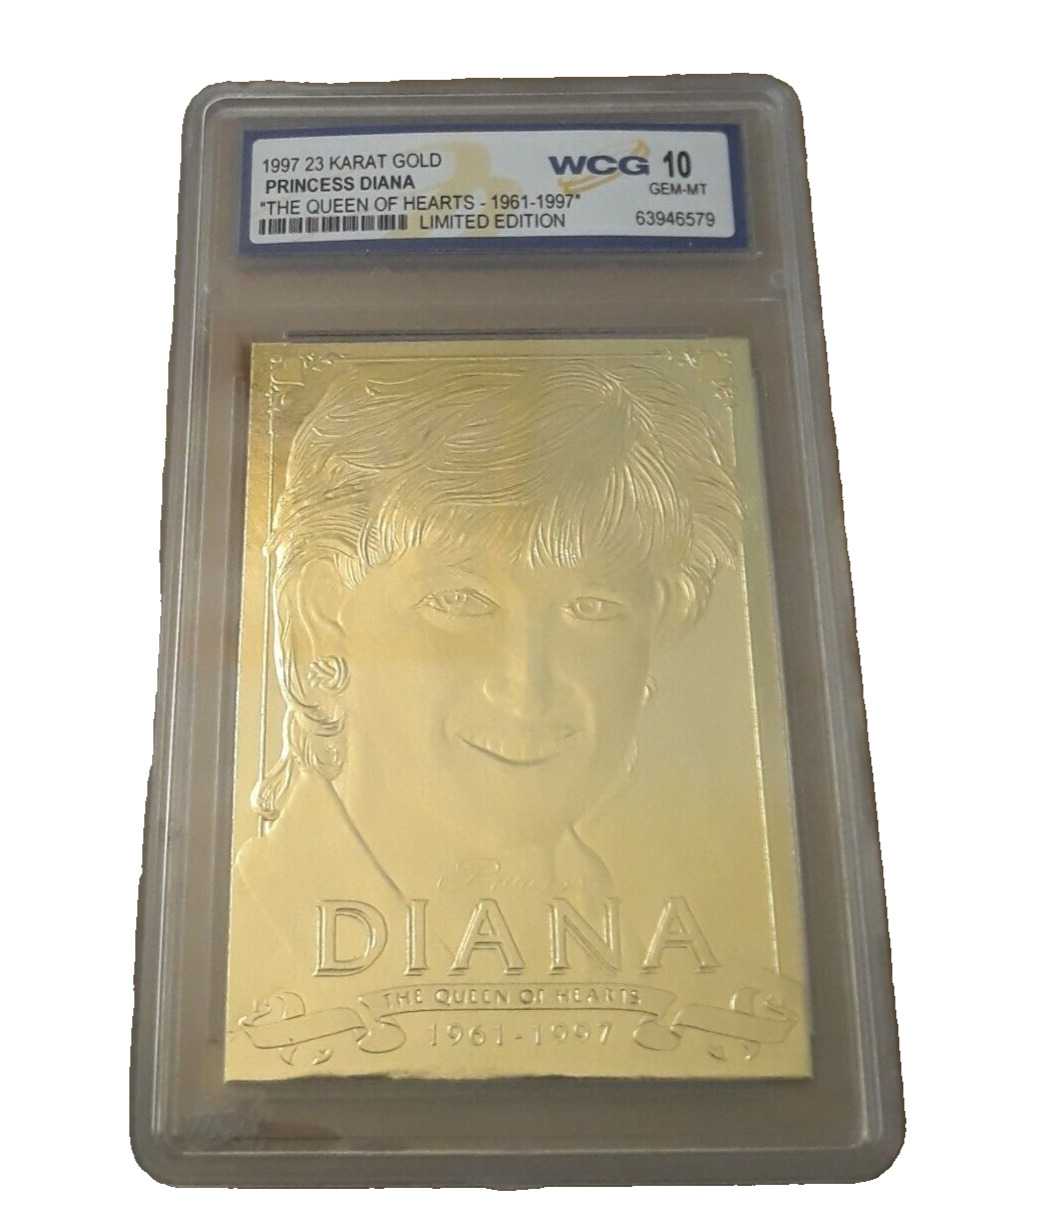 23K Gold Foil Card Princess Diana Serial 10348 Graded By WCG 10 Gem/MT 63946579